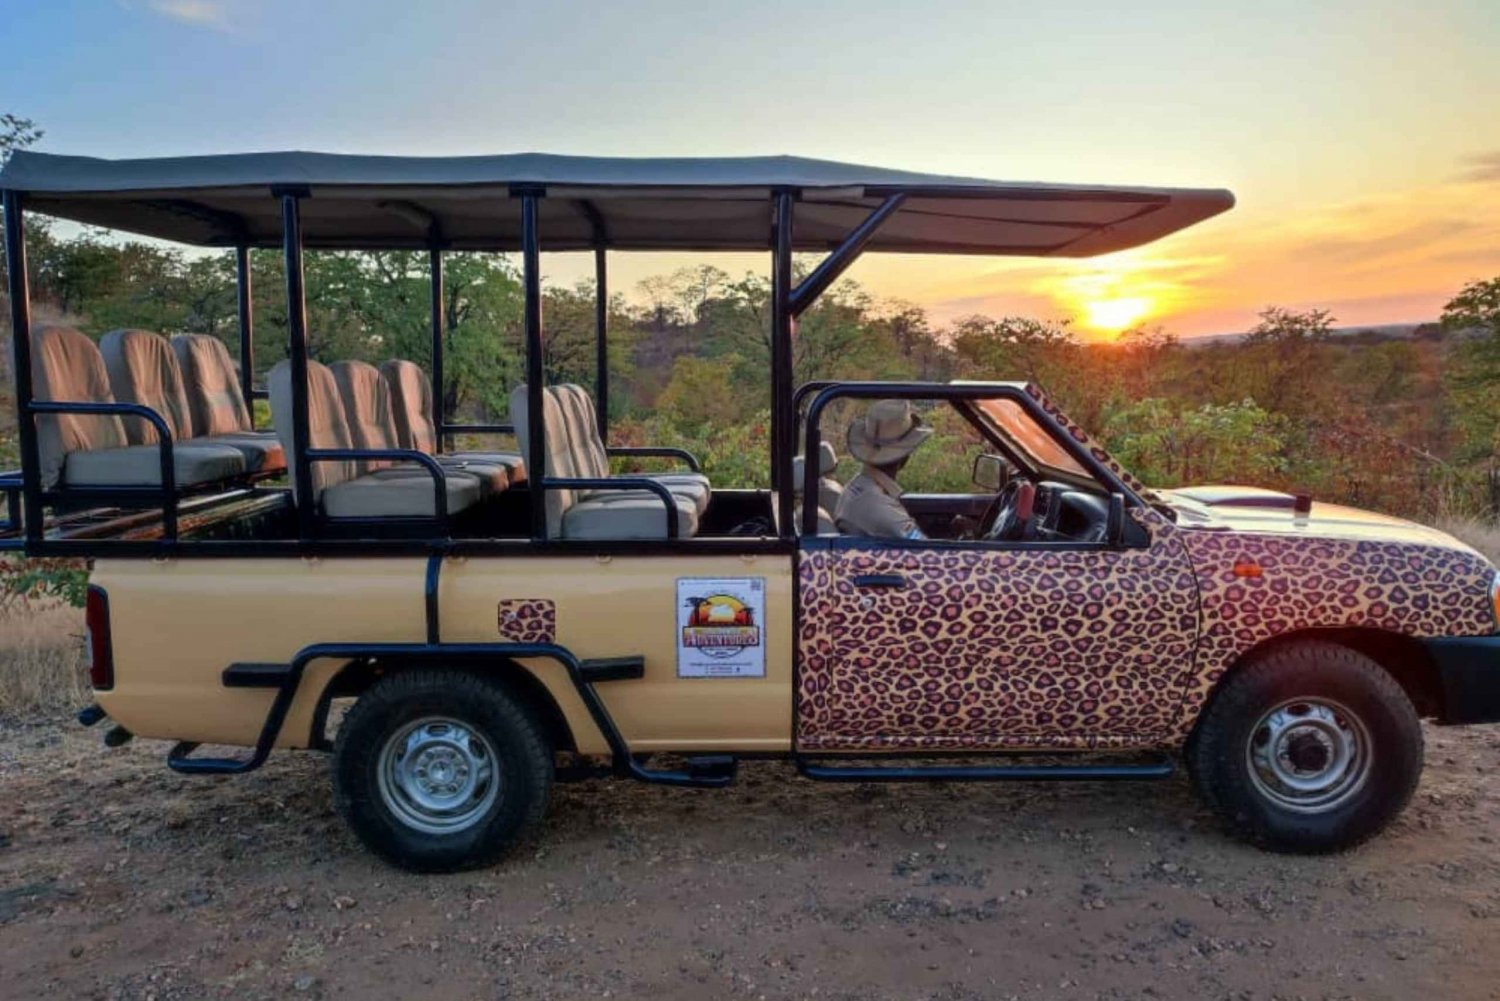 Victoria Falls Park: Moonlight Safari in Safari Jeep